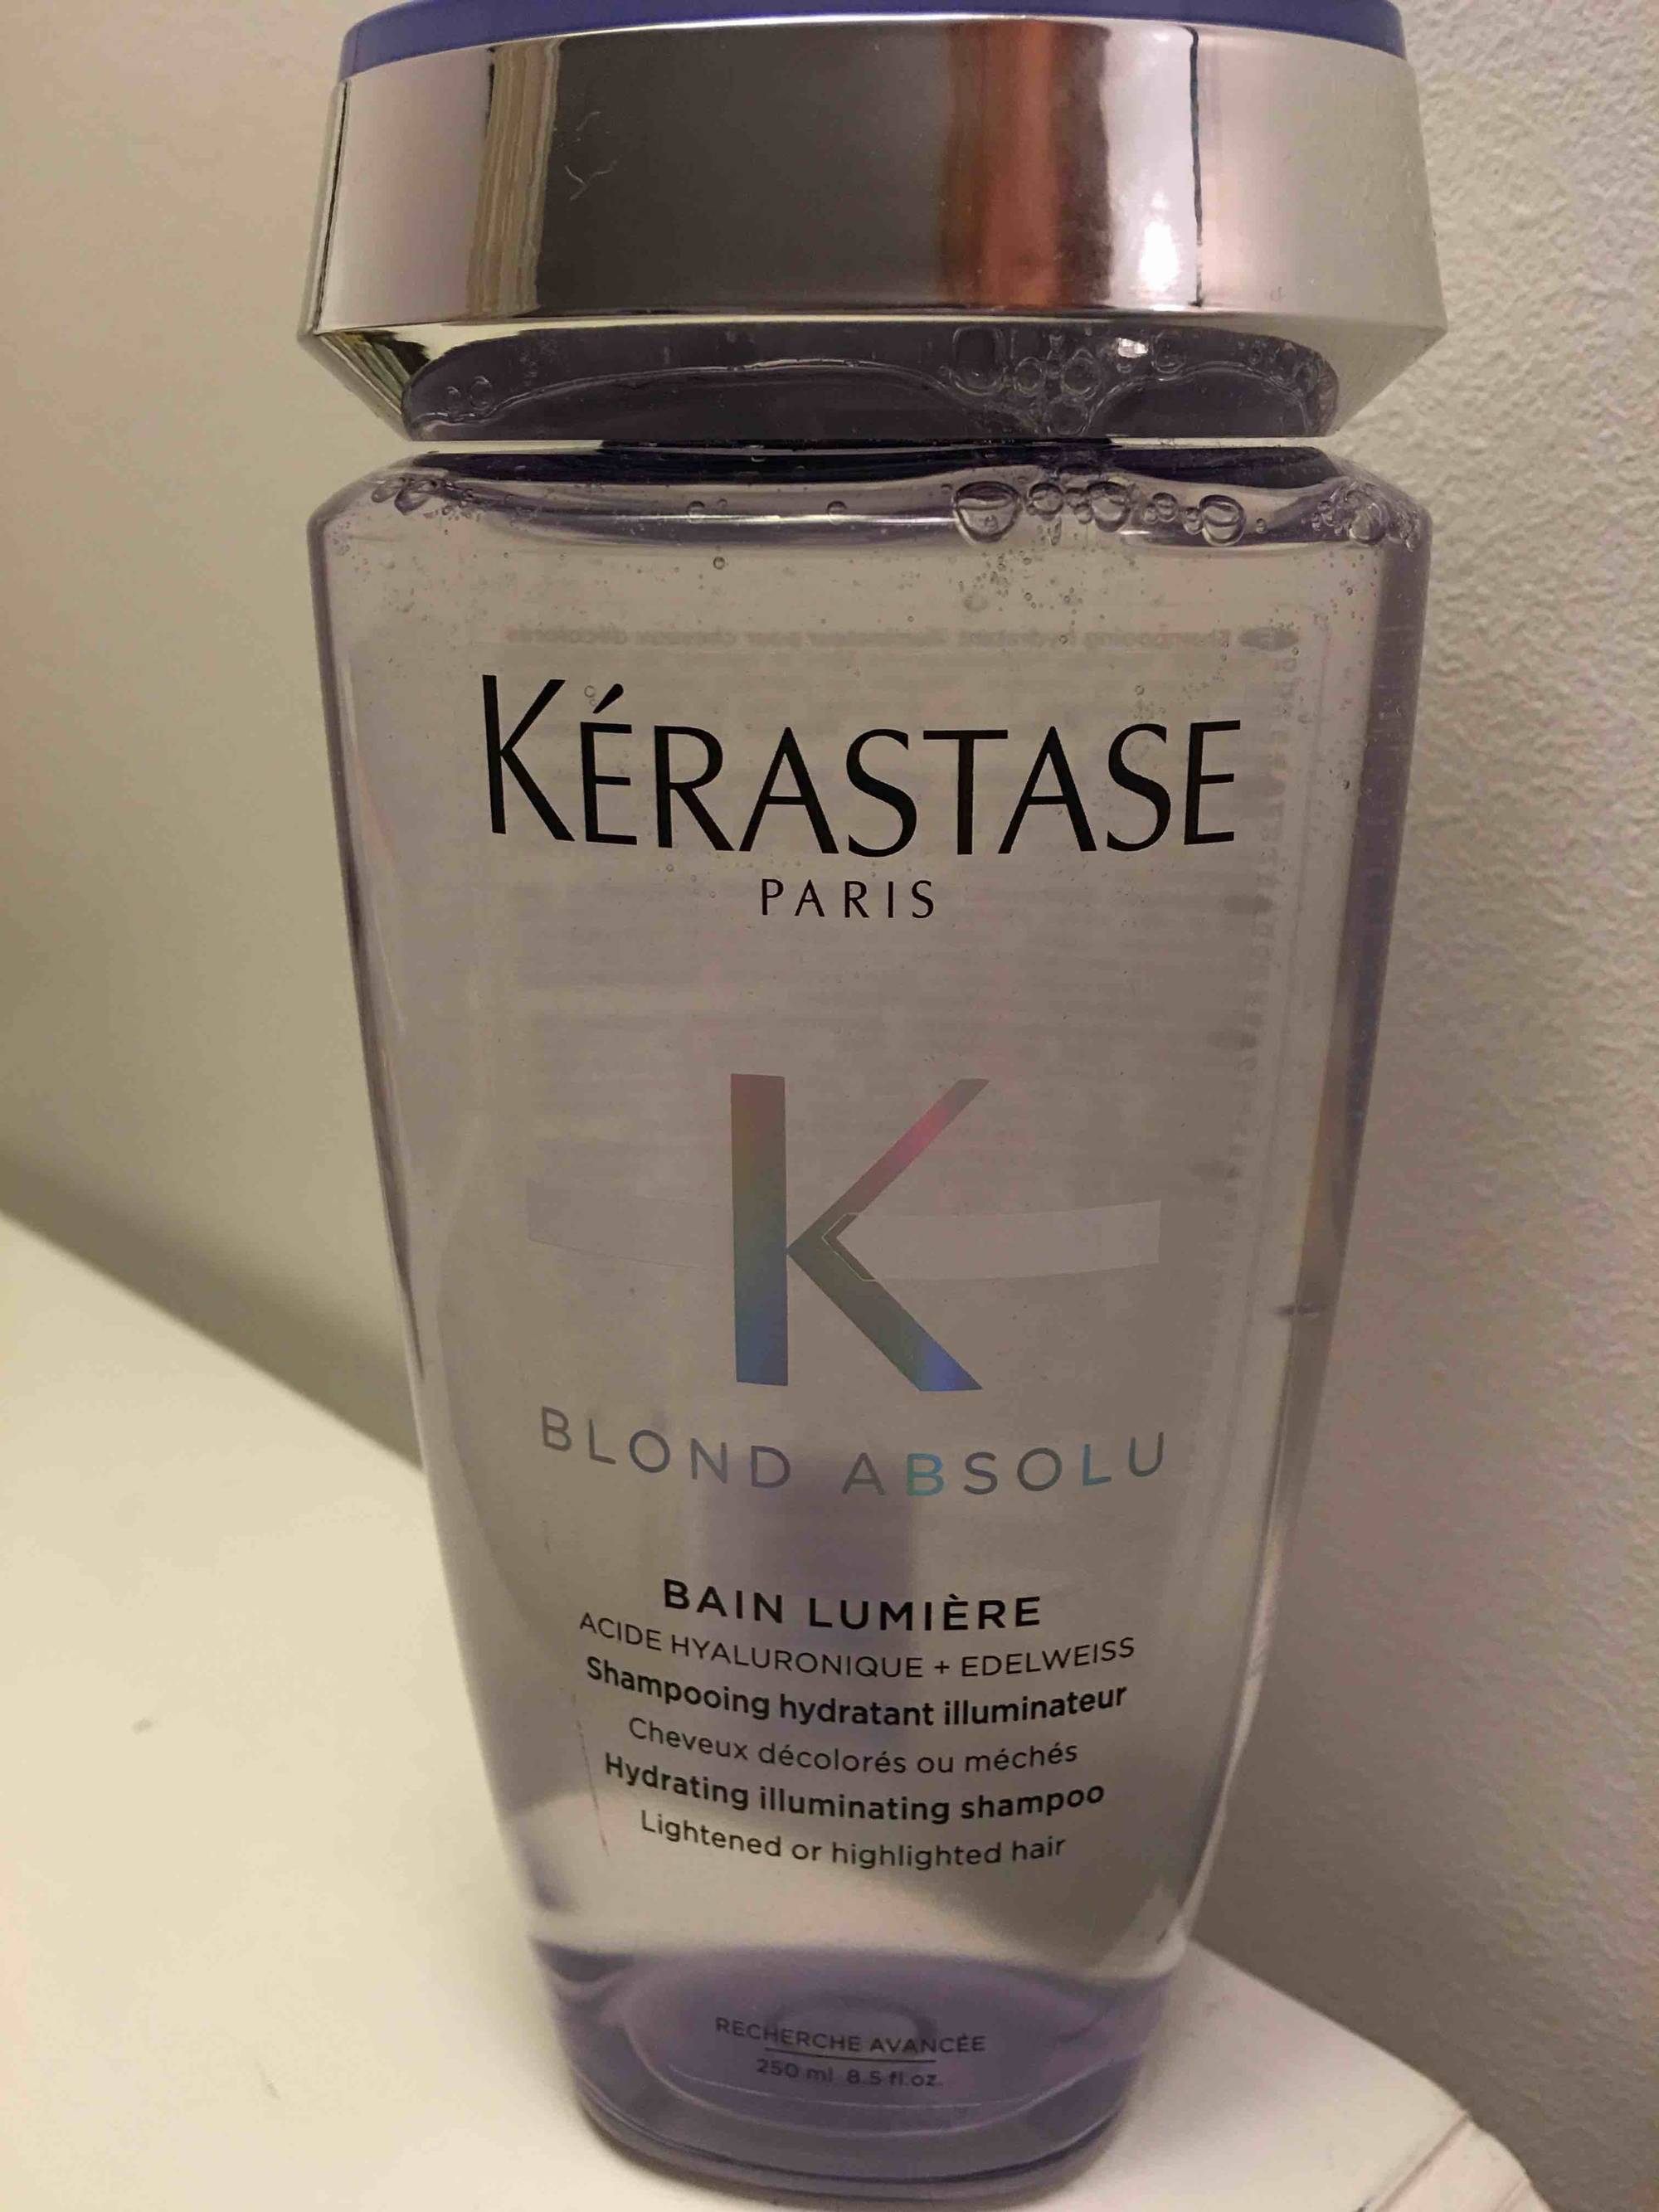 KÉRASTASE - Blond absolu - Bain lumière Shampooing hydratant illuminateur